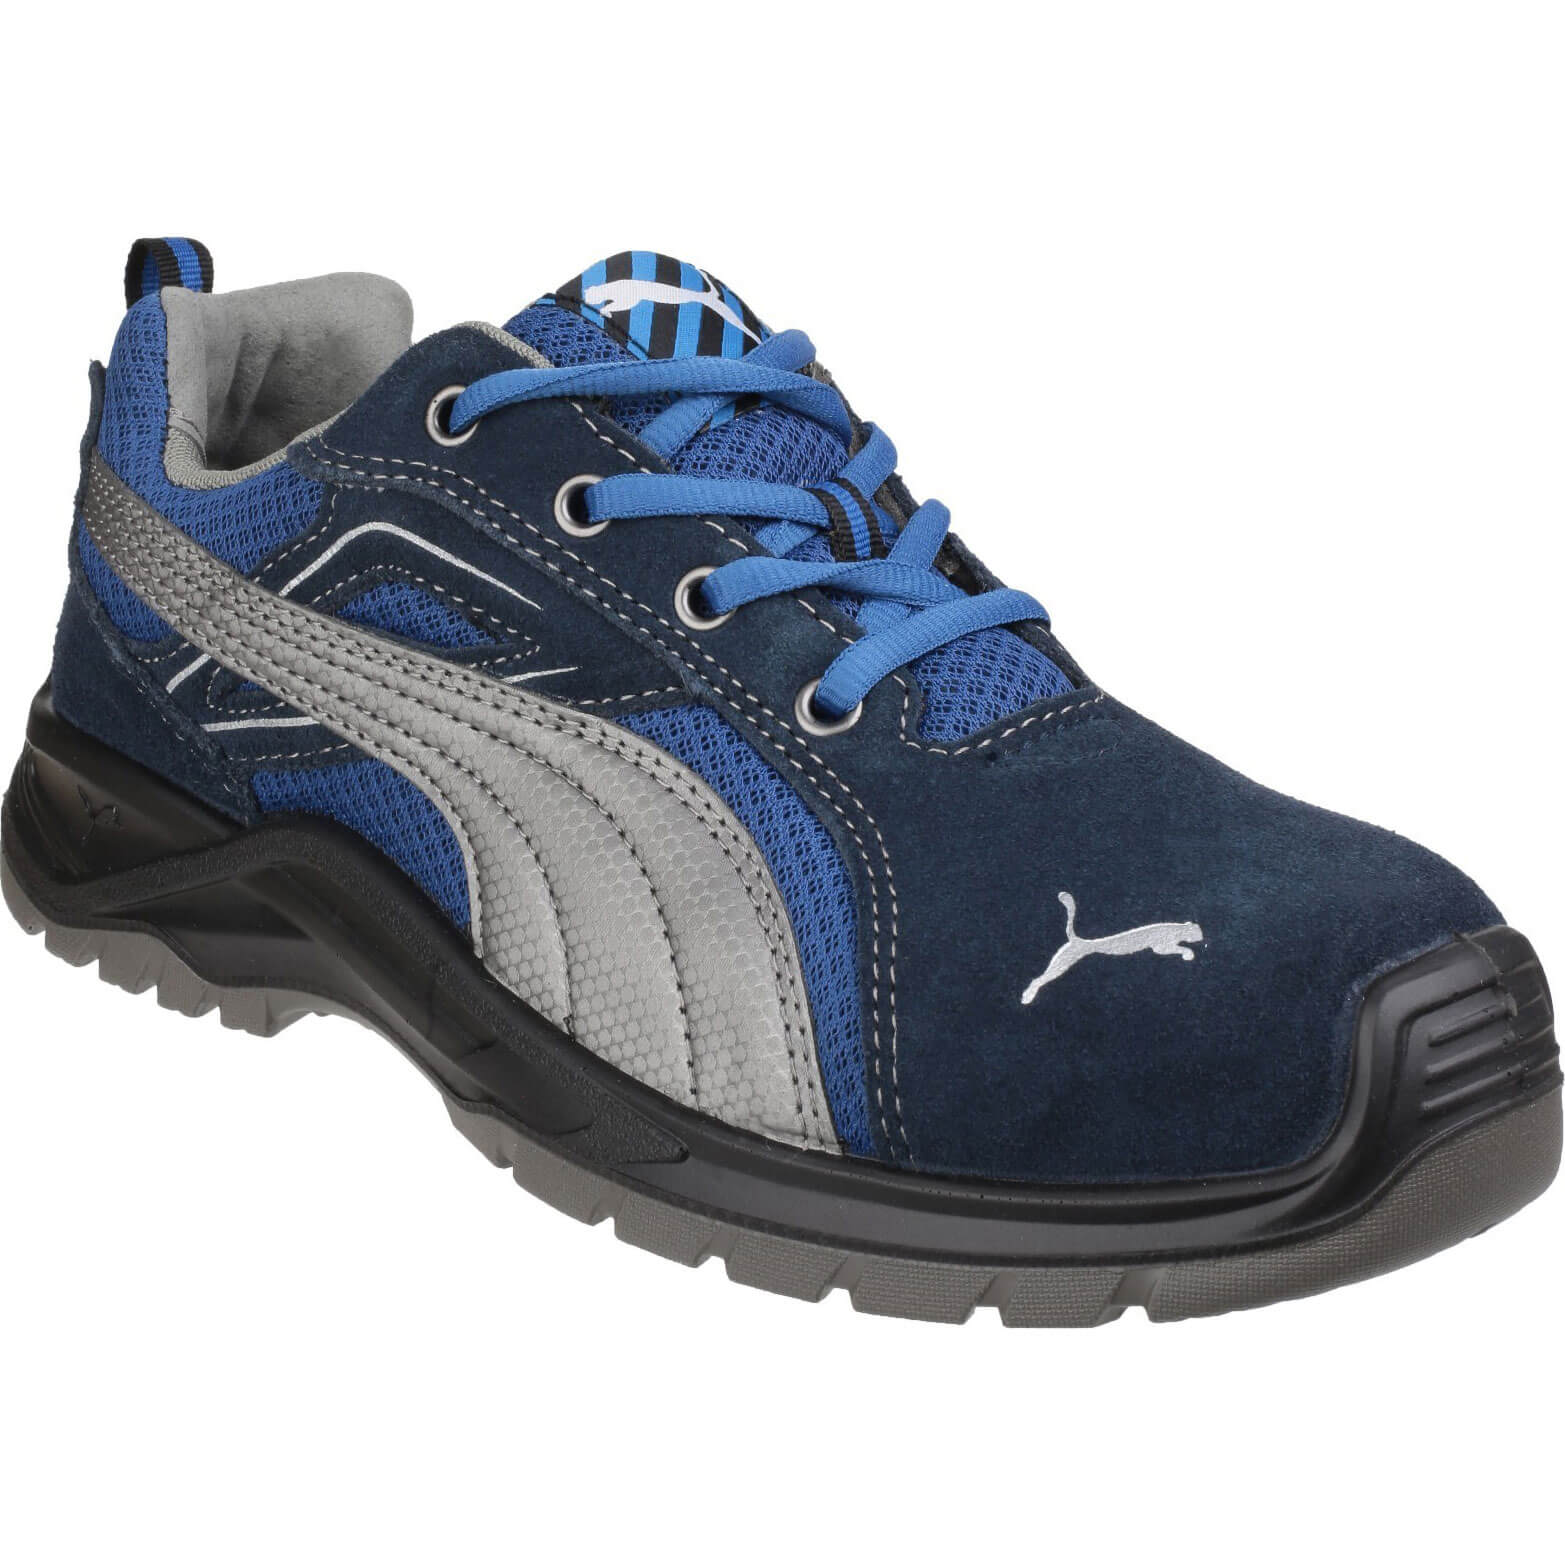 Image of Puma Safety Omni Sky Low Safety Shoe Blue Size 11